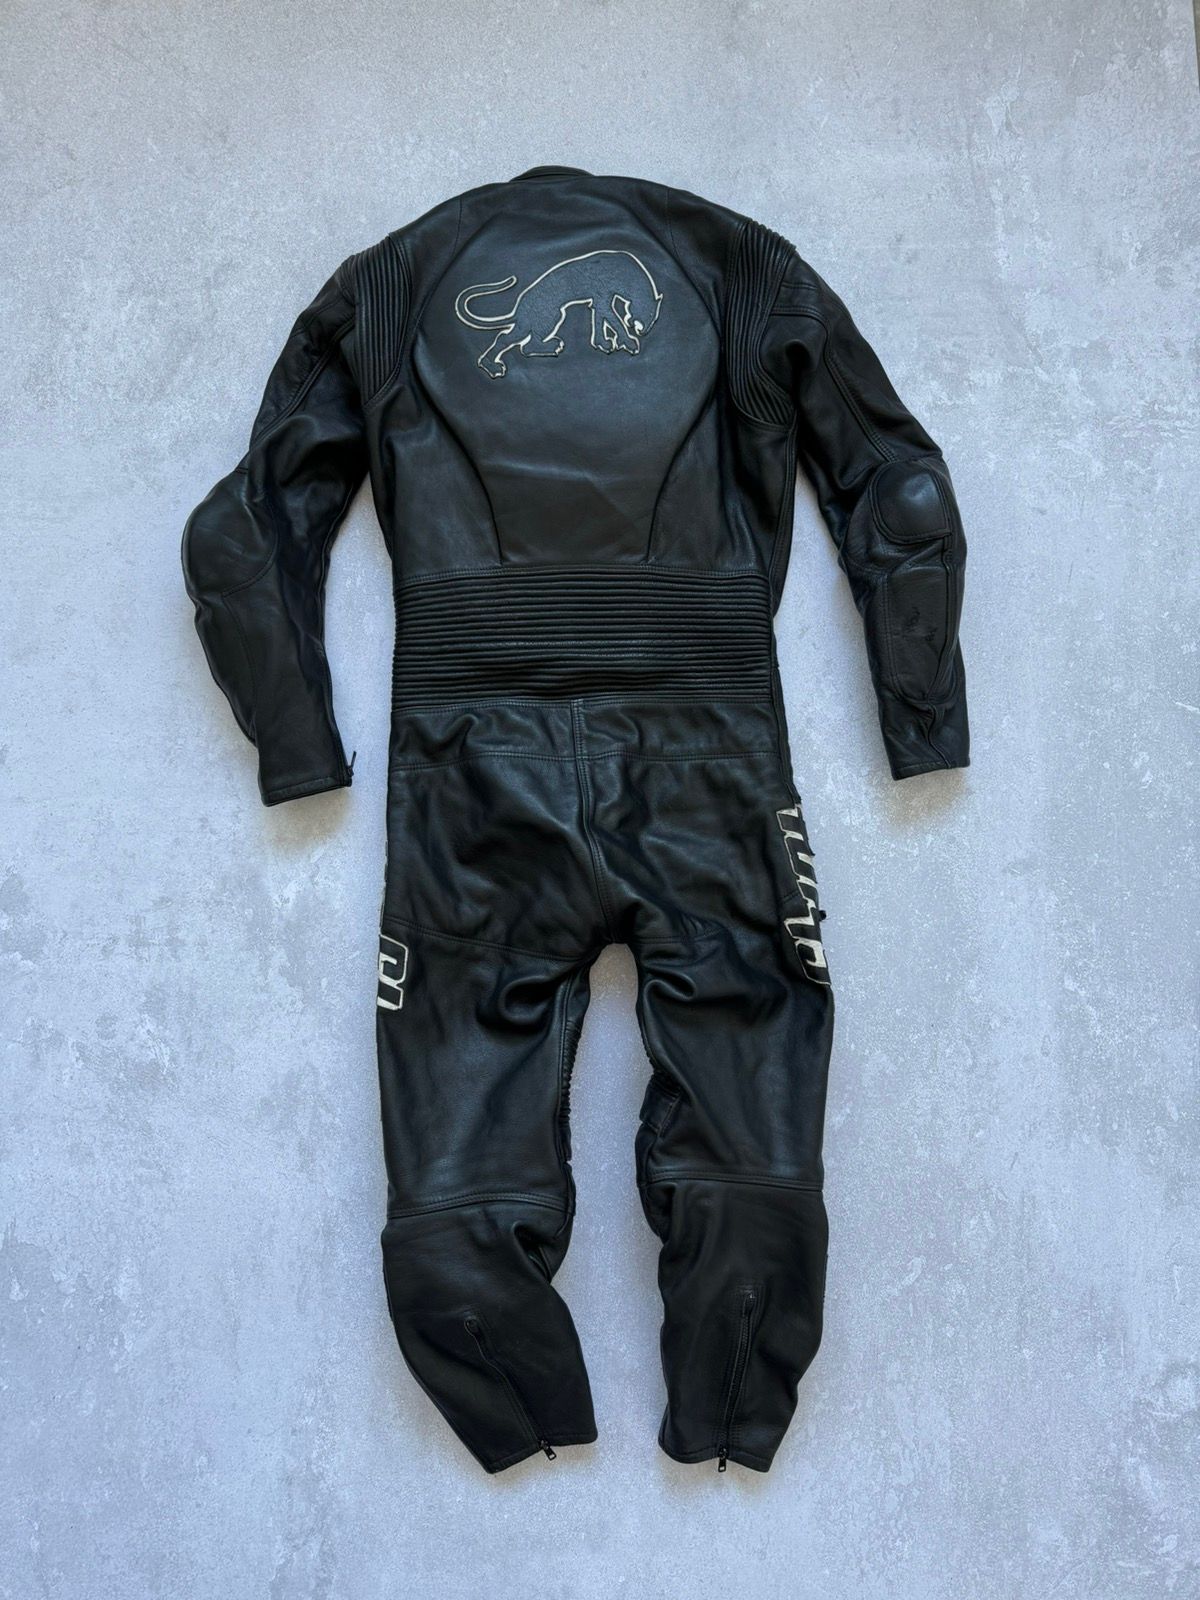 Pre-owned Furygan X Leather Jacket Furygan Moto Racing Leather Suit Black Motorcycle 90s